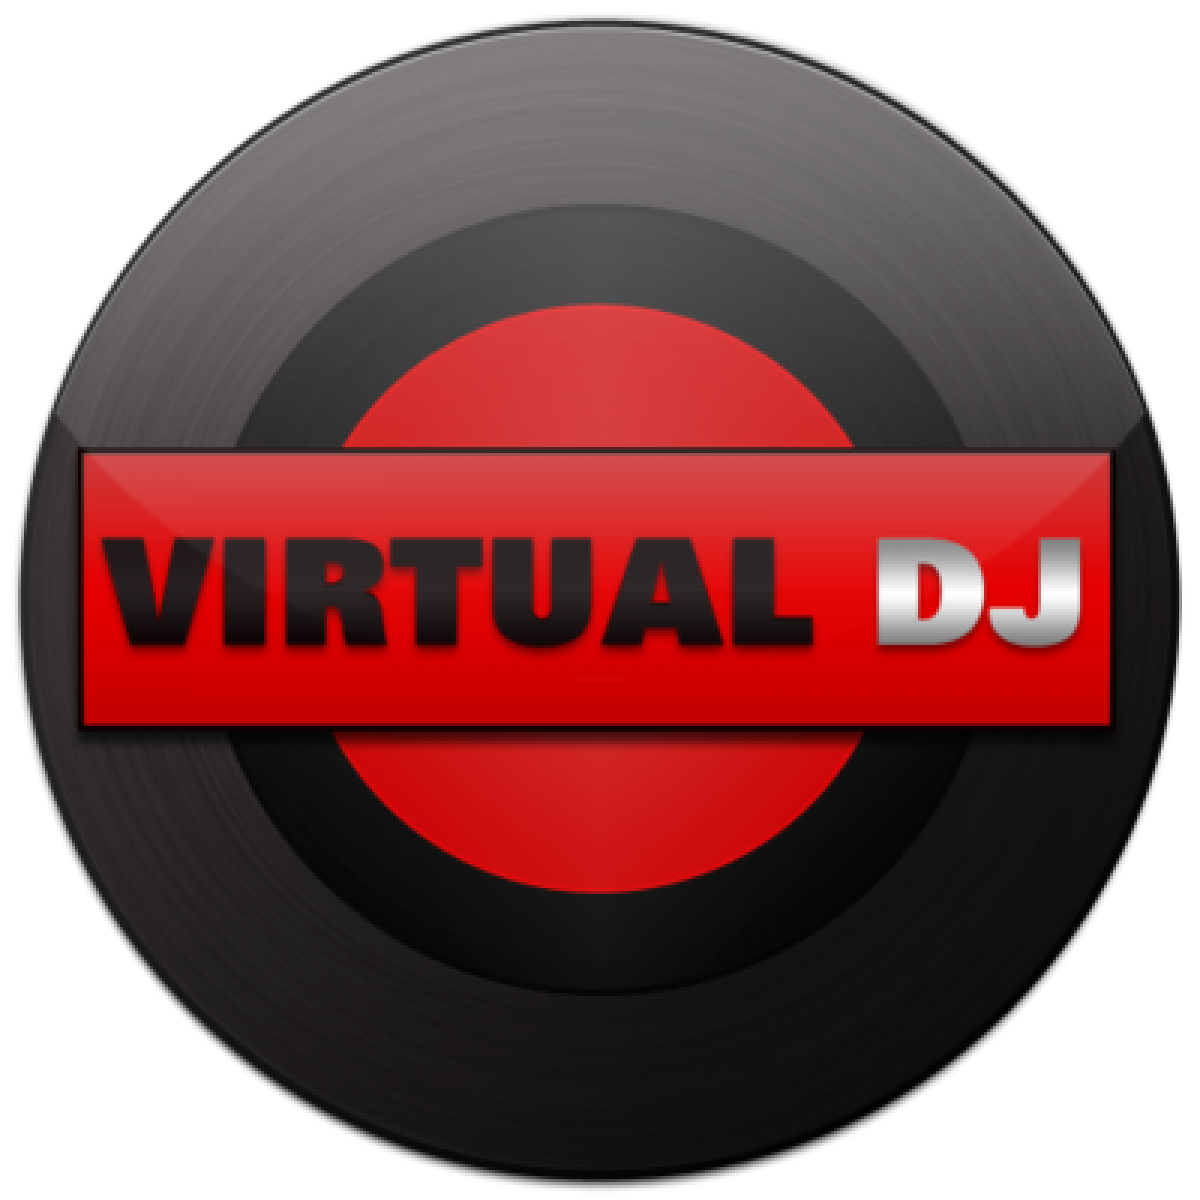 Virtual dj mixer home free. download full version